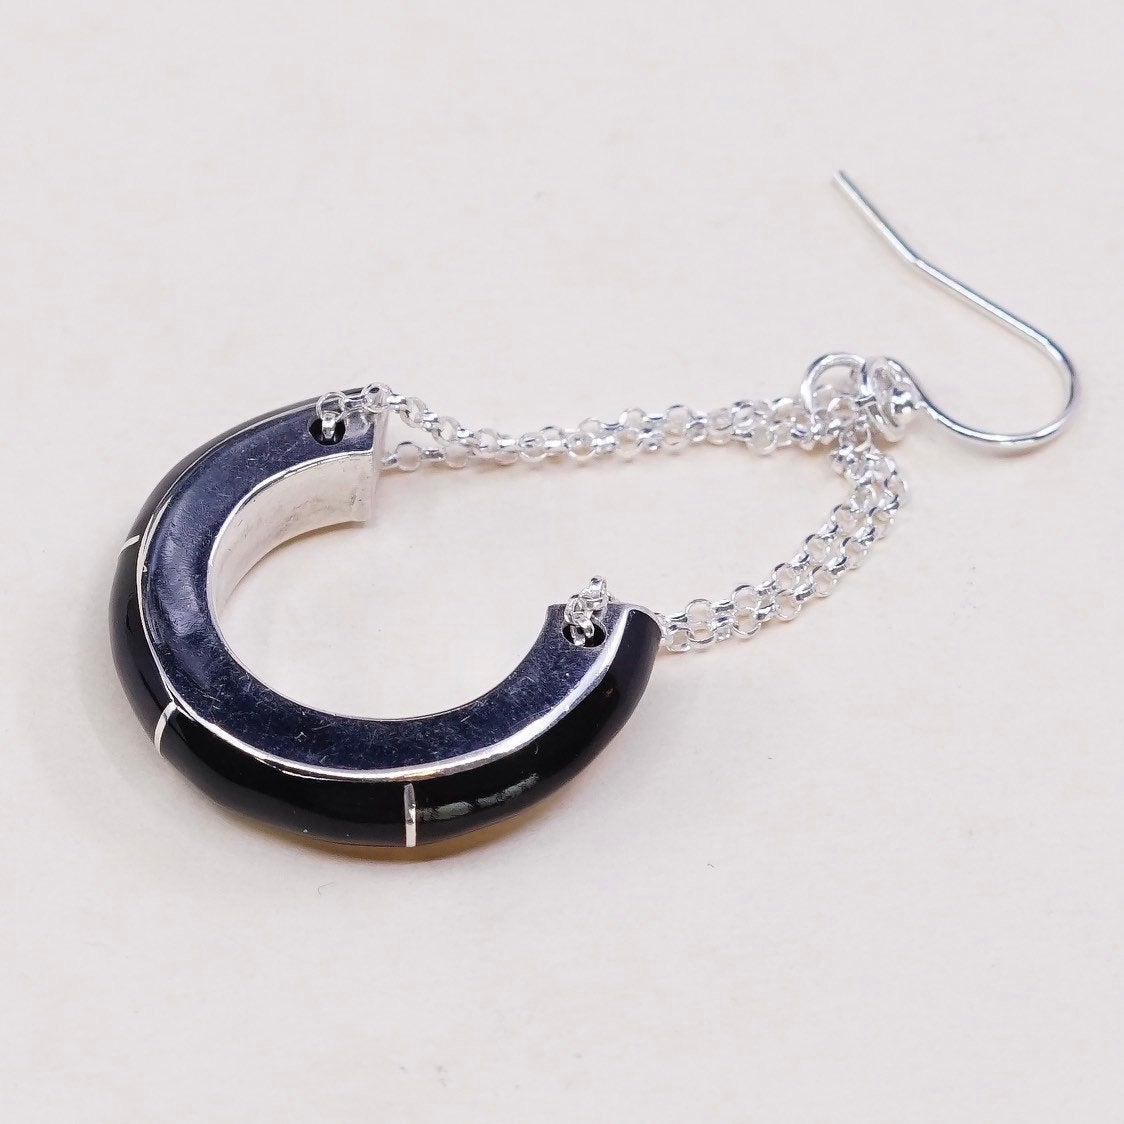 vtg Sterling silver handmade earrings, 925 w/ circle shaped dangles n obsidian